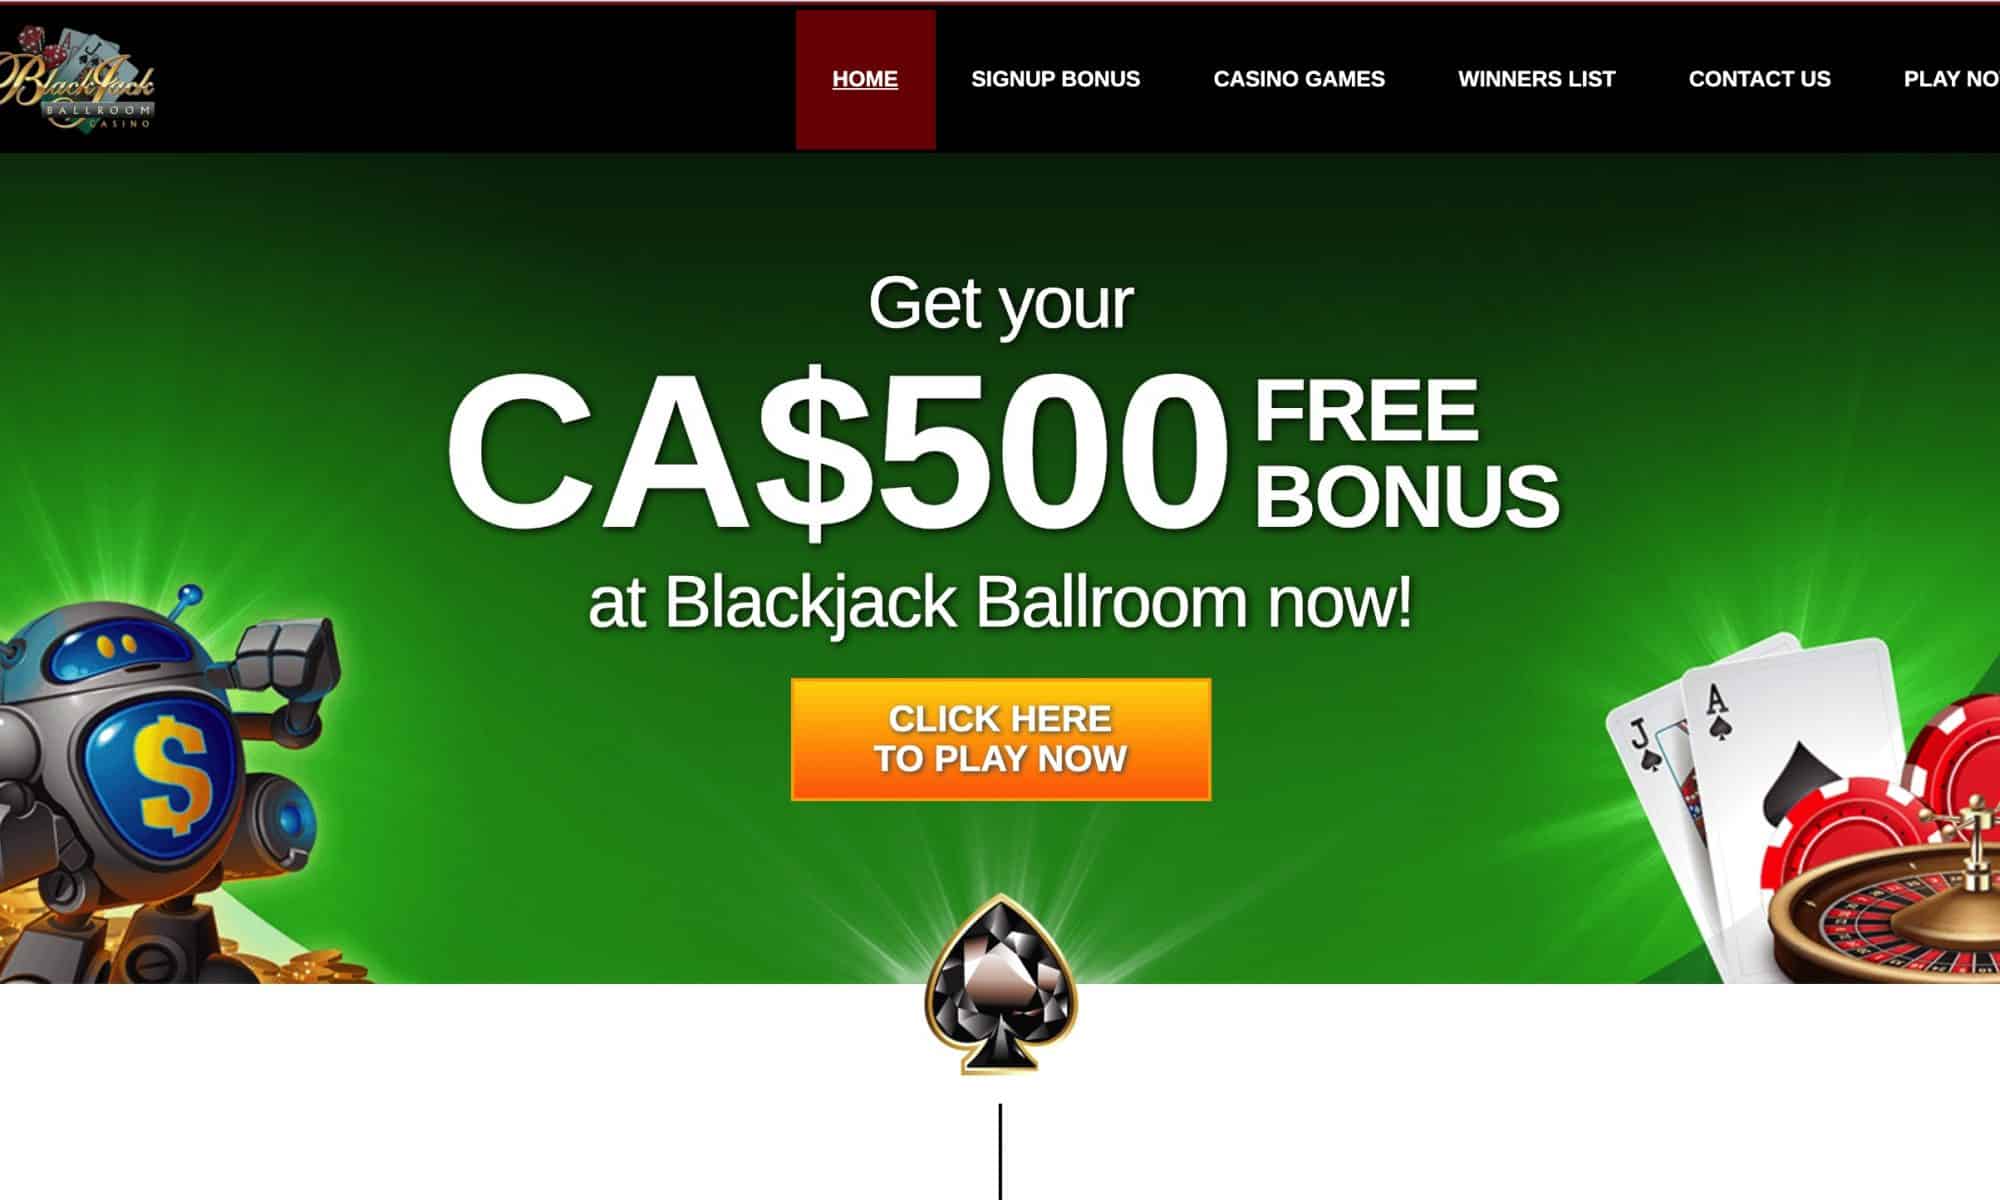 Blackjack Ballroom - Get up to $500 free with 175% match bonus